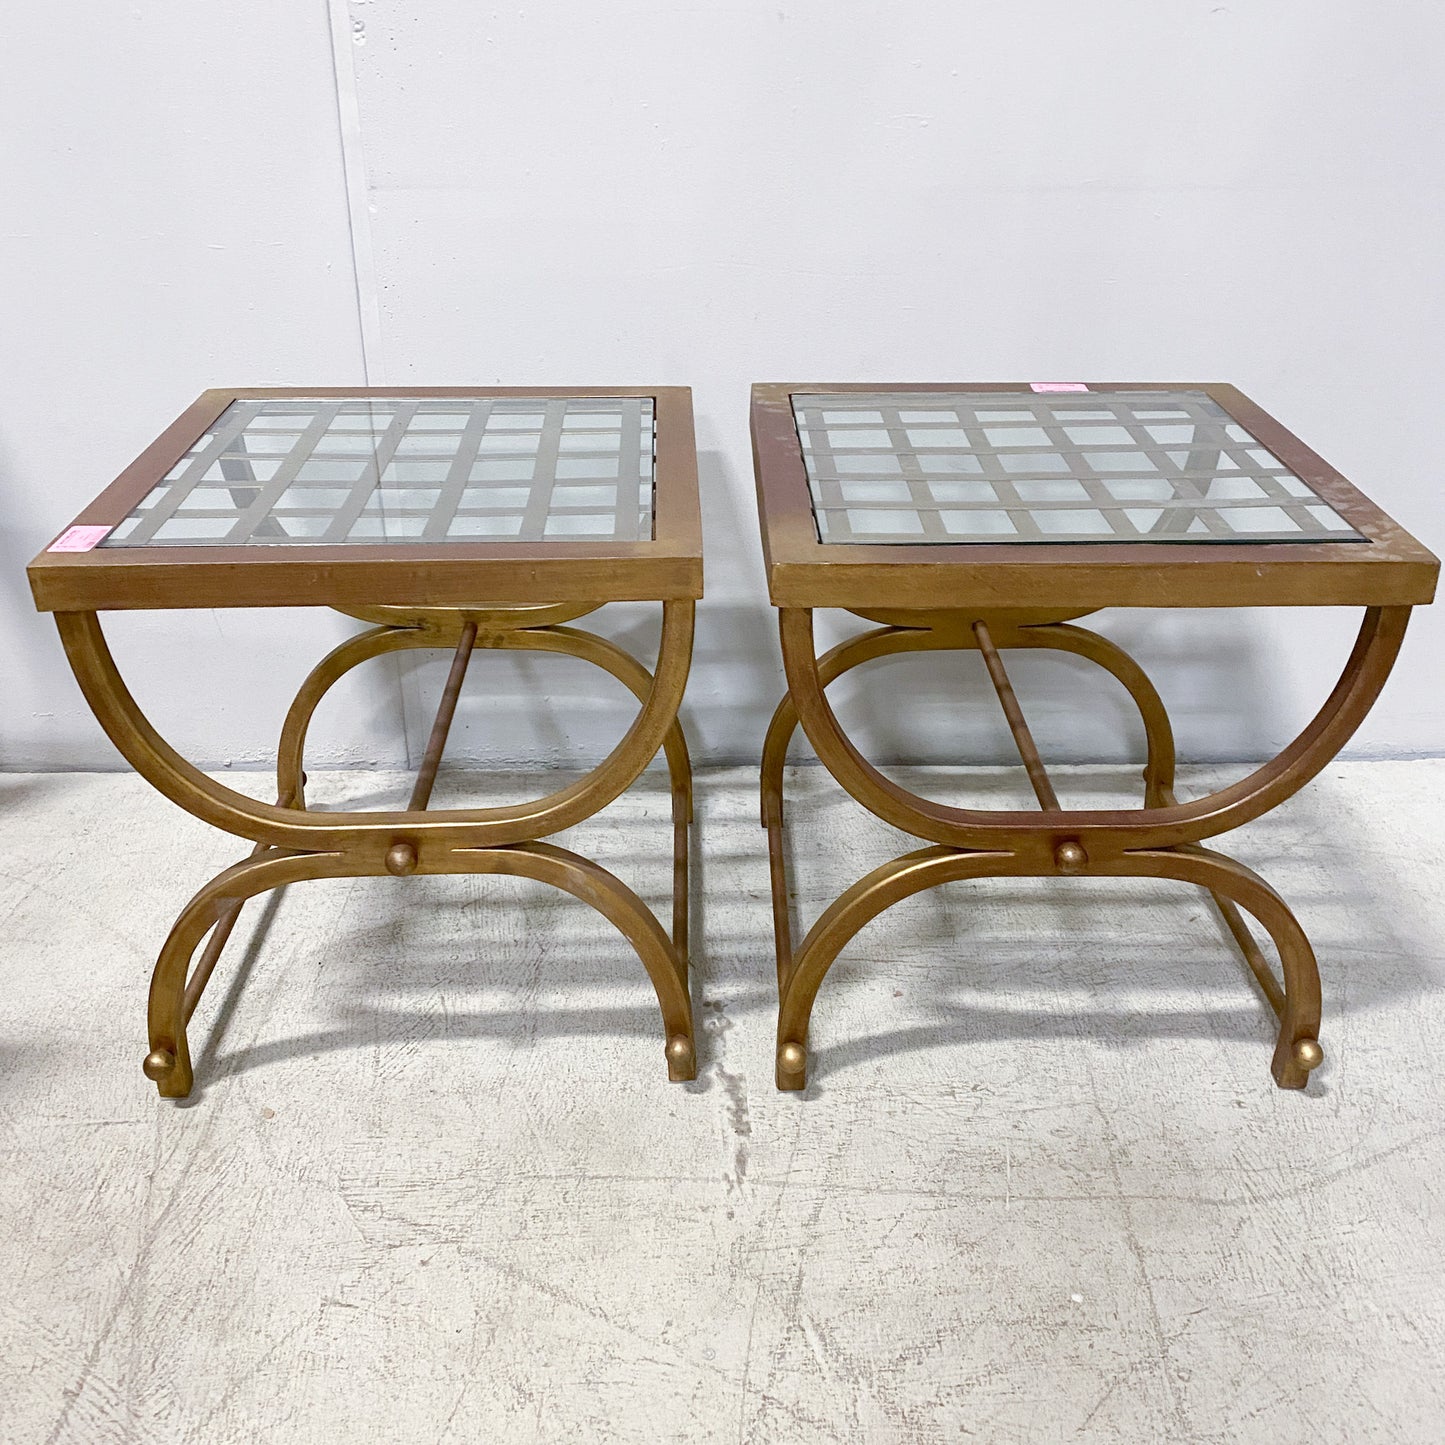 Metallic End Tables (Set of 2)